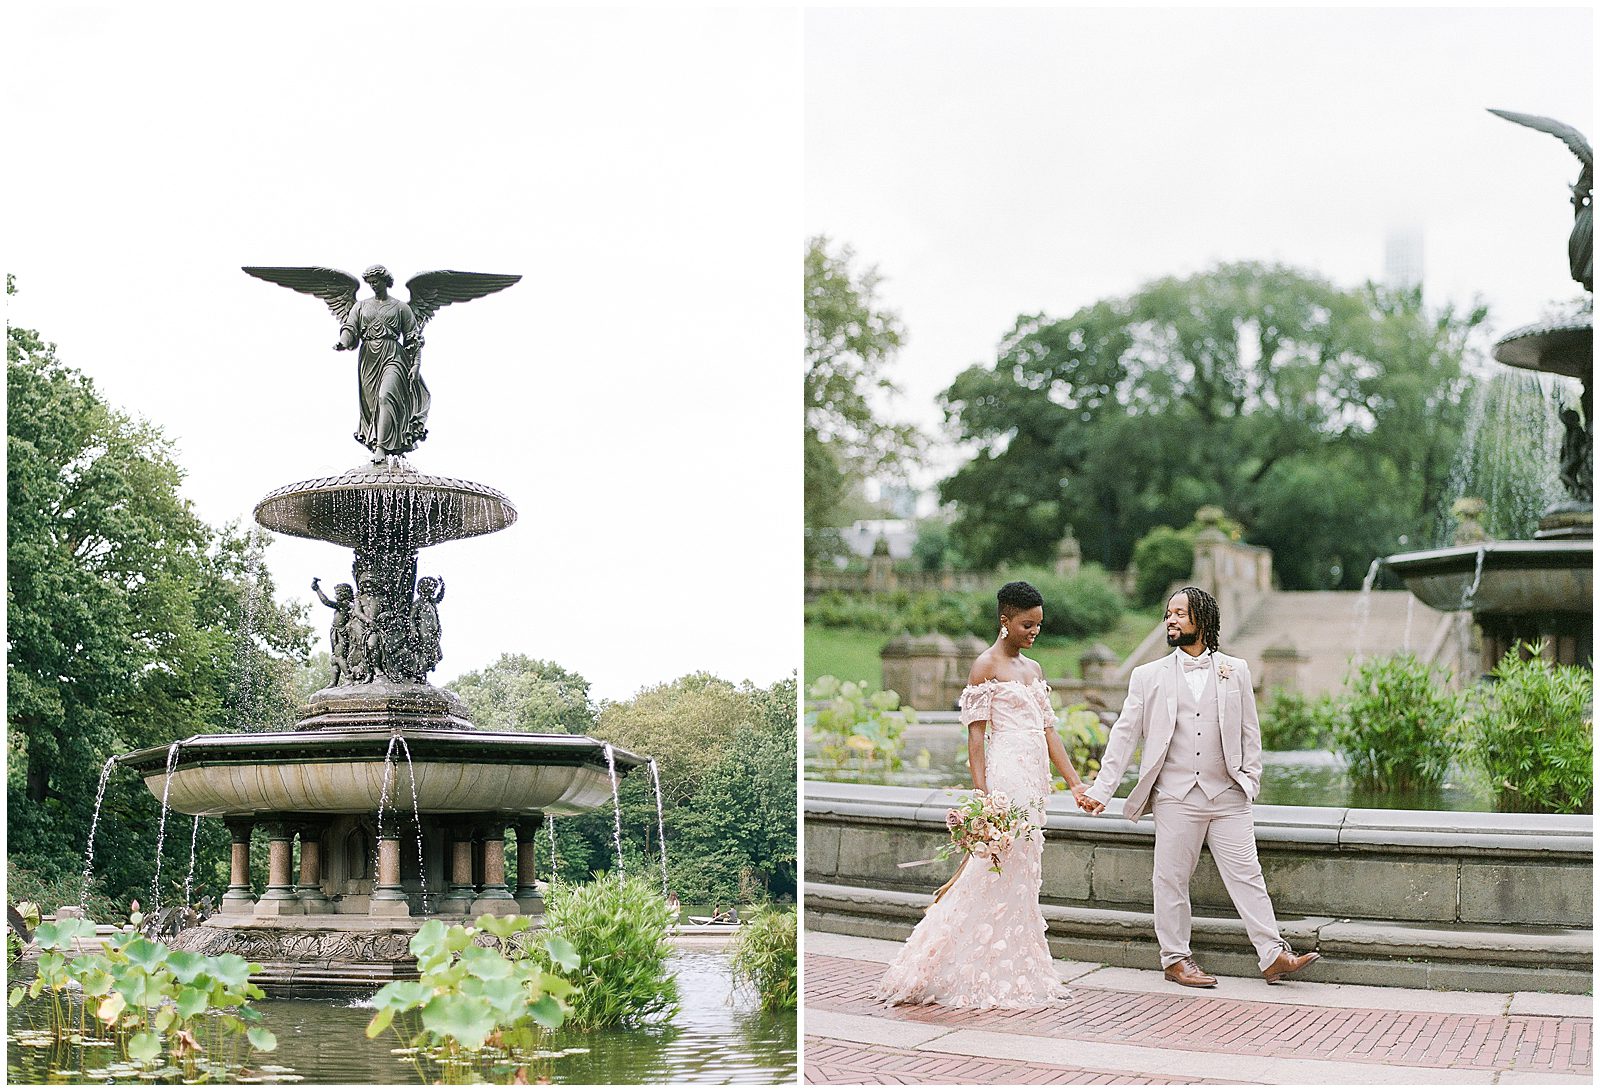 Bethesda Fountain Wedding in Central Park NYC